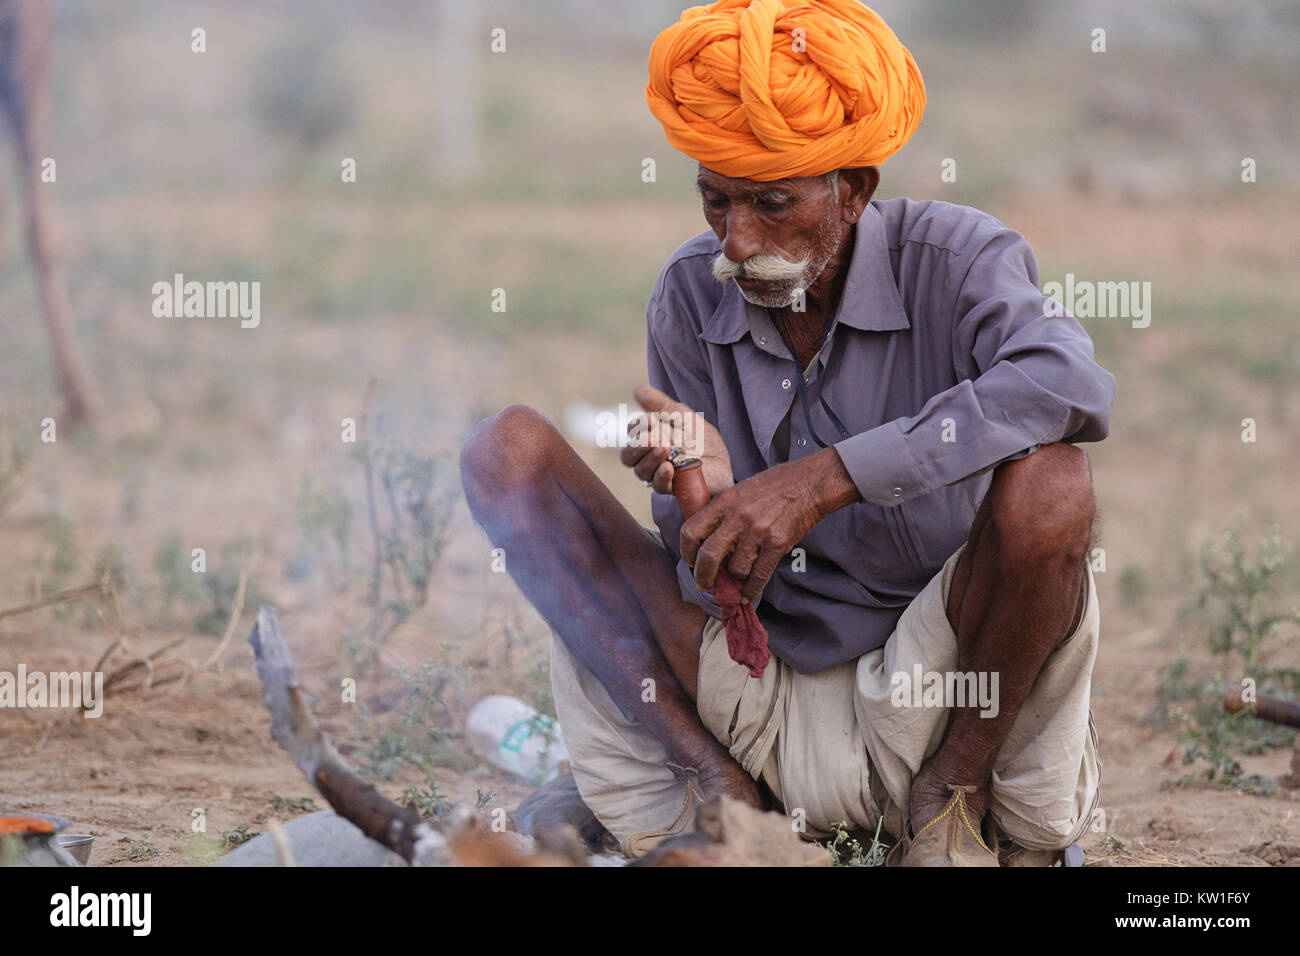 Scene at Pushkar Camel Fair, man in orange turban lighting a cigar at a firplace, Pushkar, Rajasthan, India Stock Photo